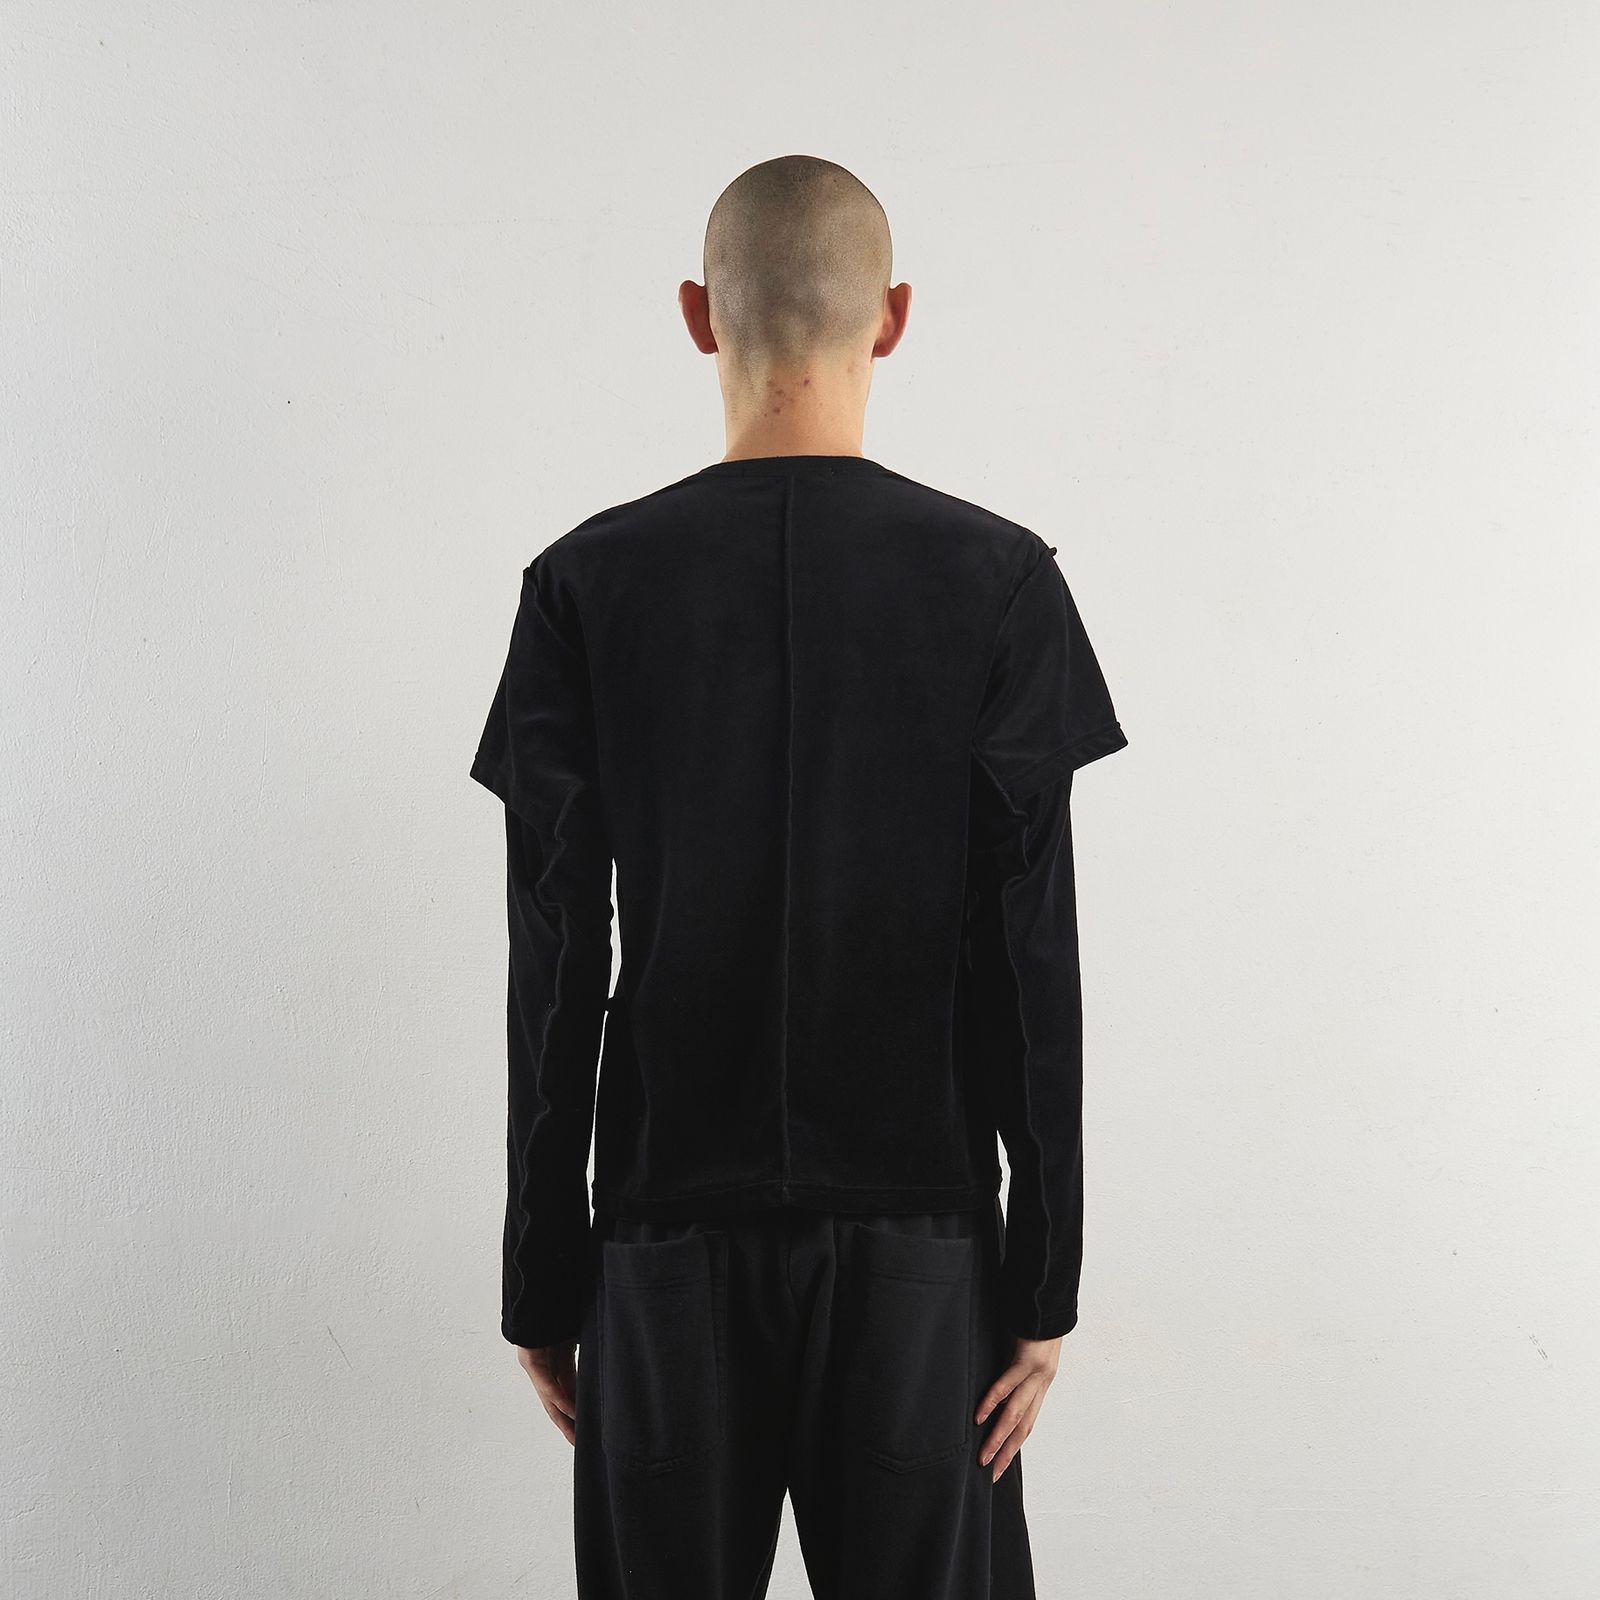 NVRFRGT - 【残り一点】Velour Double Layer Long Sleeve T-shirt ...